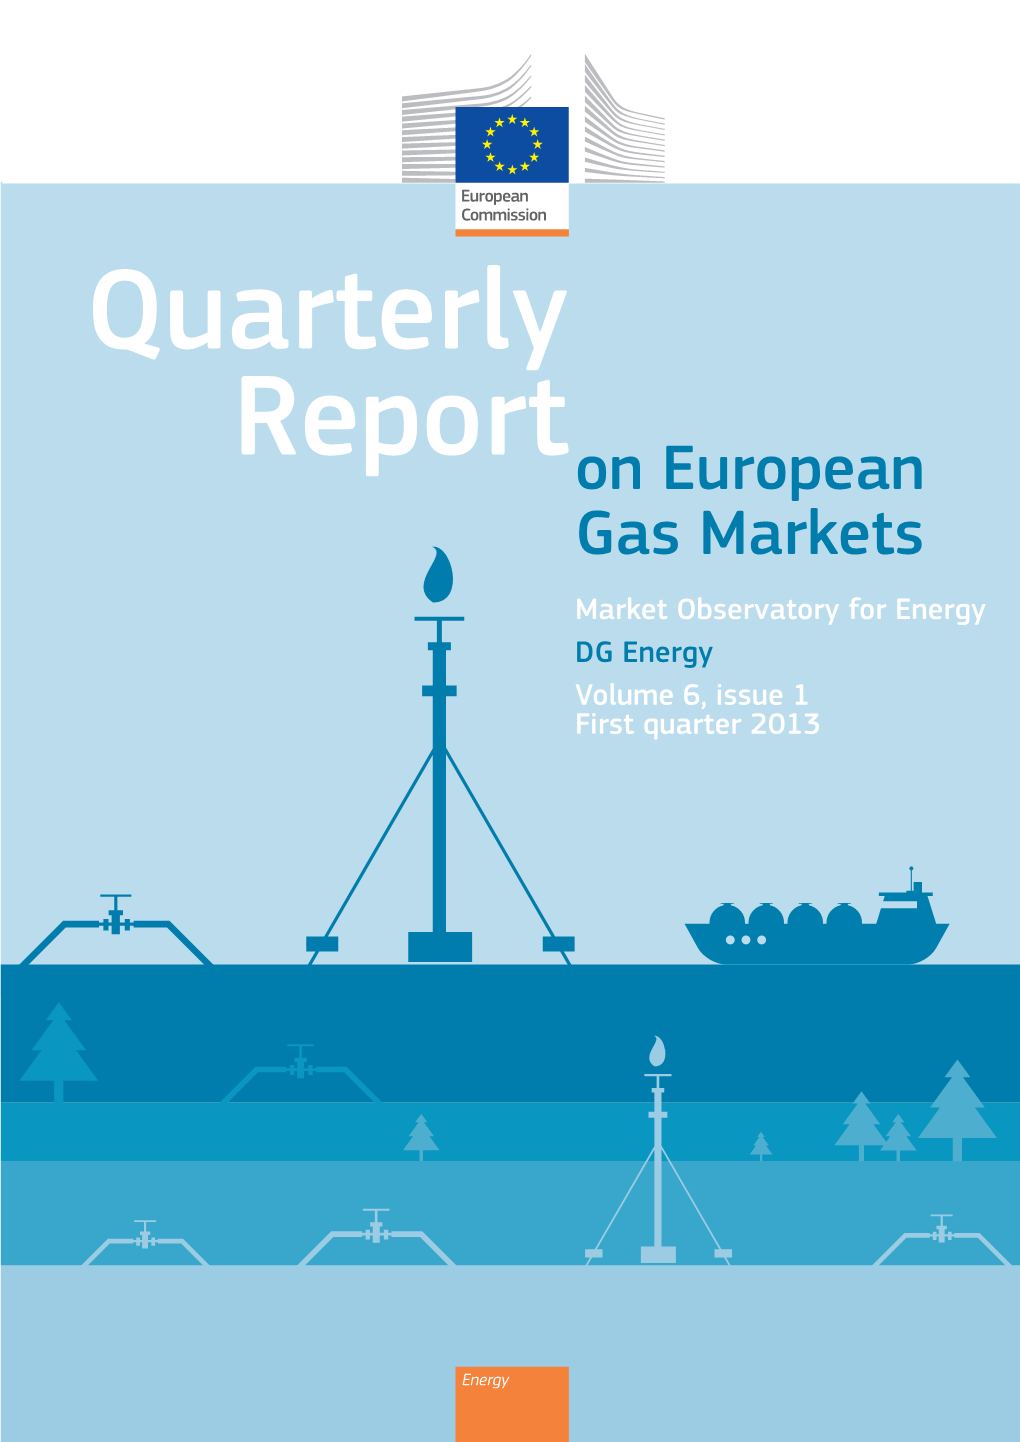 On European Gas Markets Market Observatory for Energy DG Energy Volume 6, Issue 1 First Quarter 2013